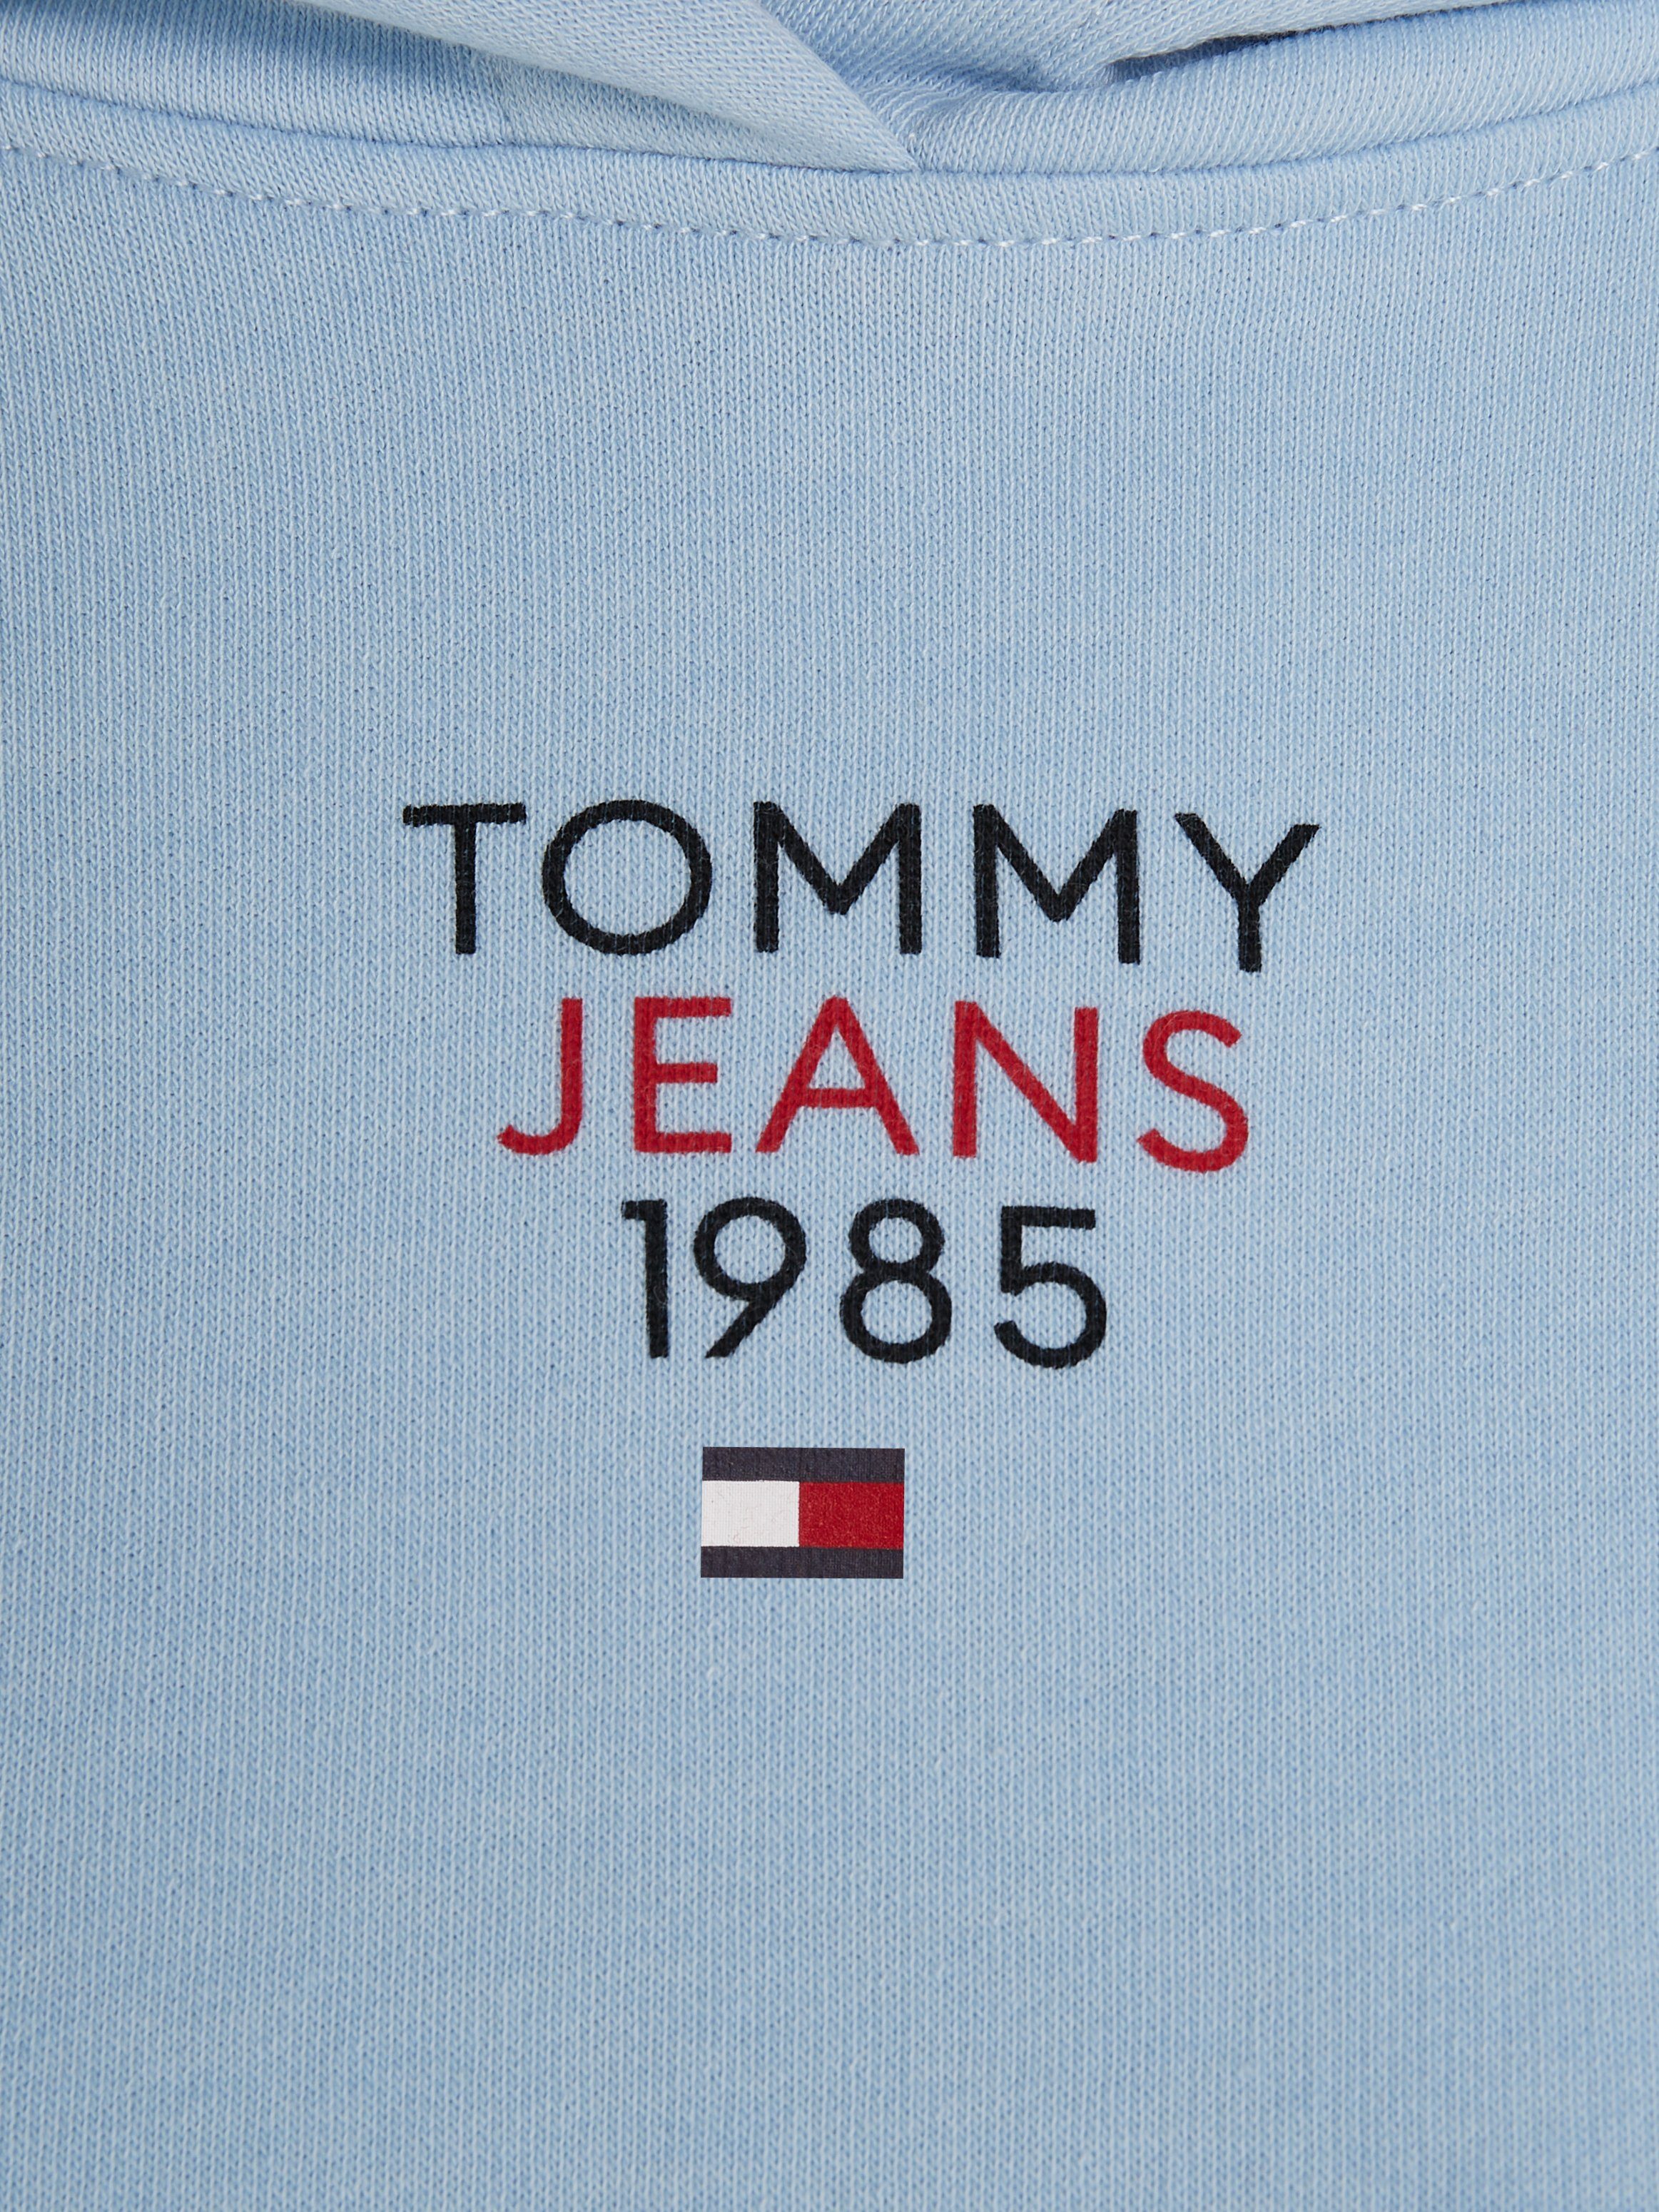 LOGO1 TJW Kapuzensweatshirt RLX Stickerei ESSENTIAL HOOD Tommy EXT Jeans Markenlabel mit Breezy_Blue